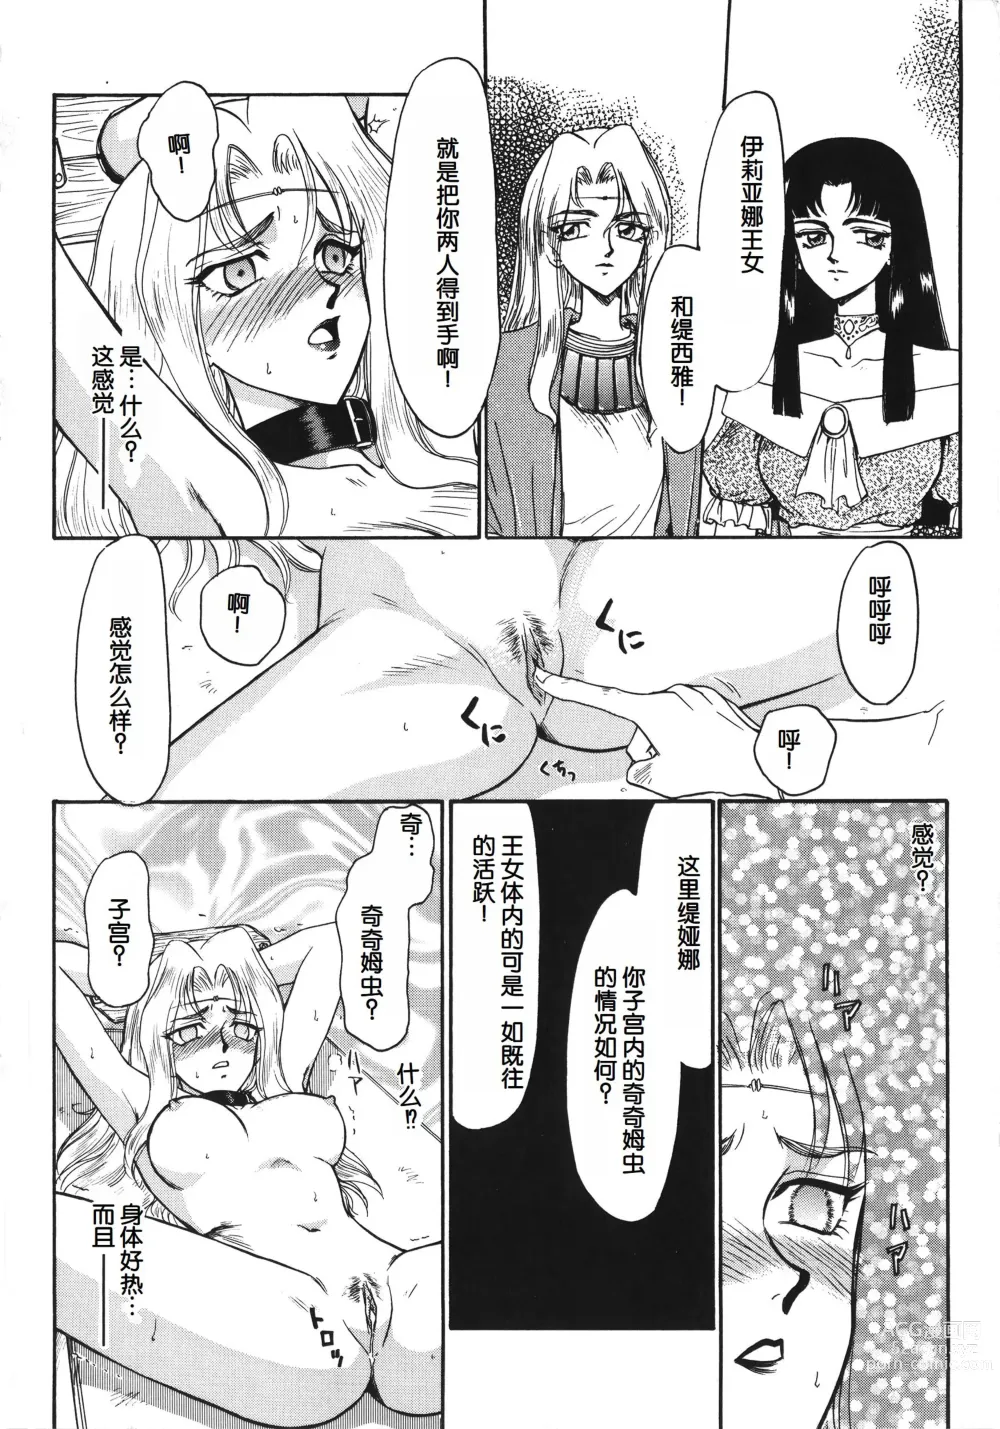 Page 28 of manga Bad Moon...